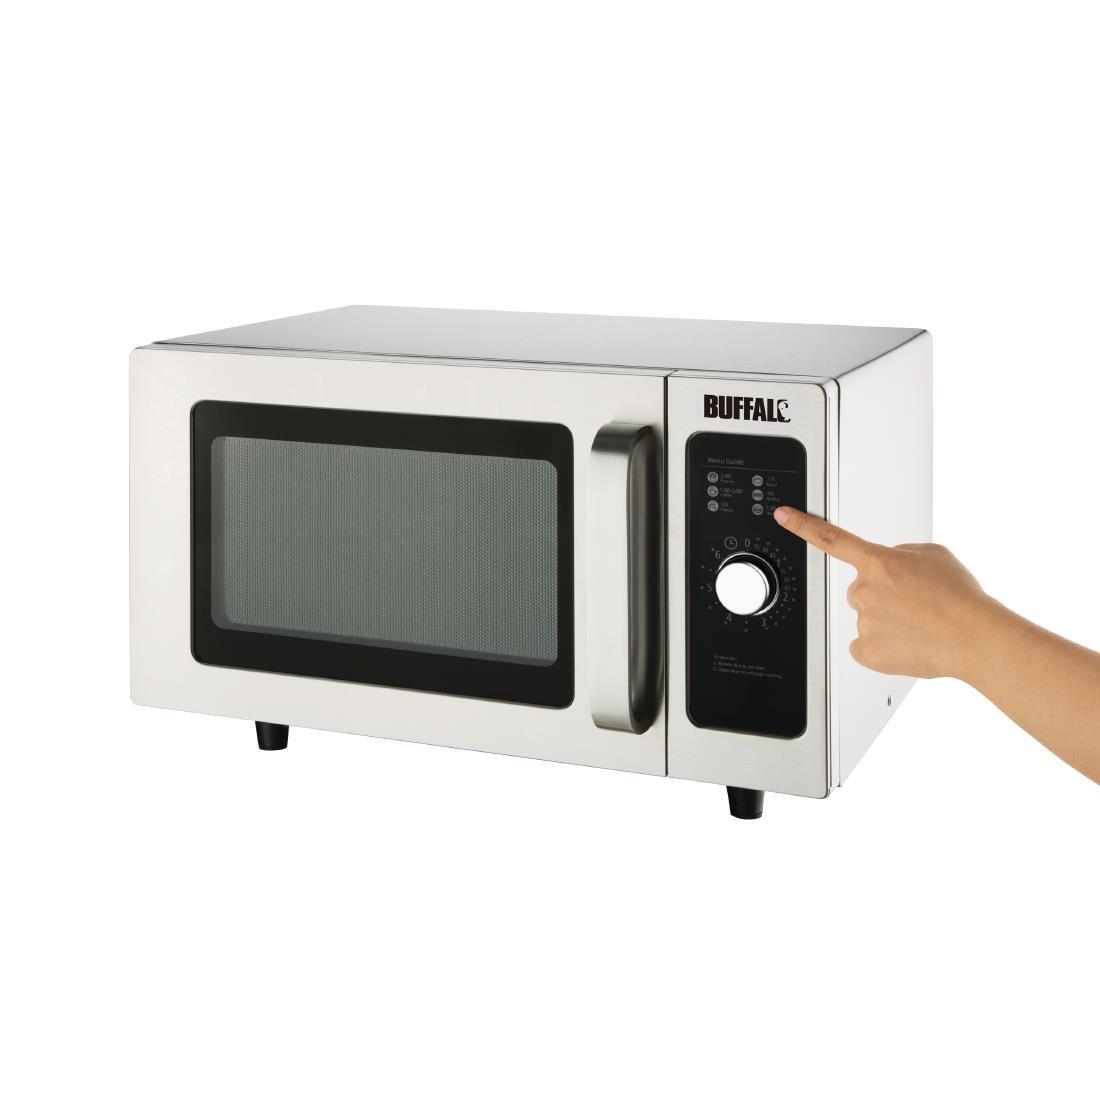 Buffalo Manual Commercial Microwave 25ltr 1000W - FB861  - 2